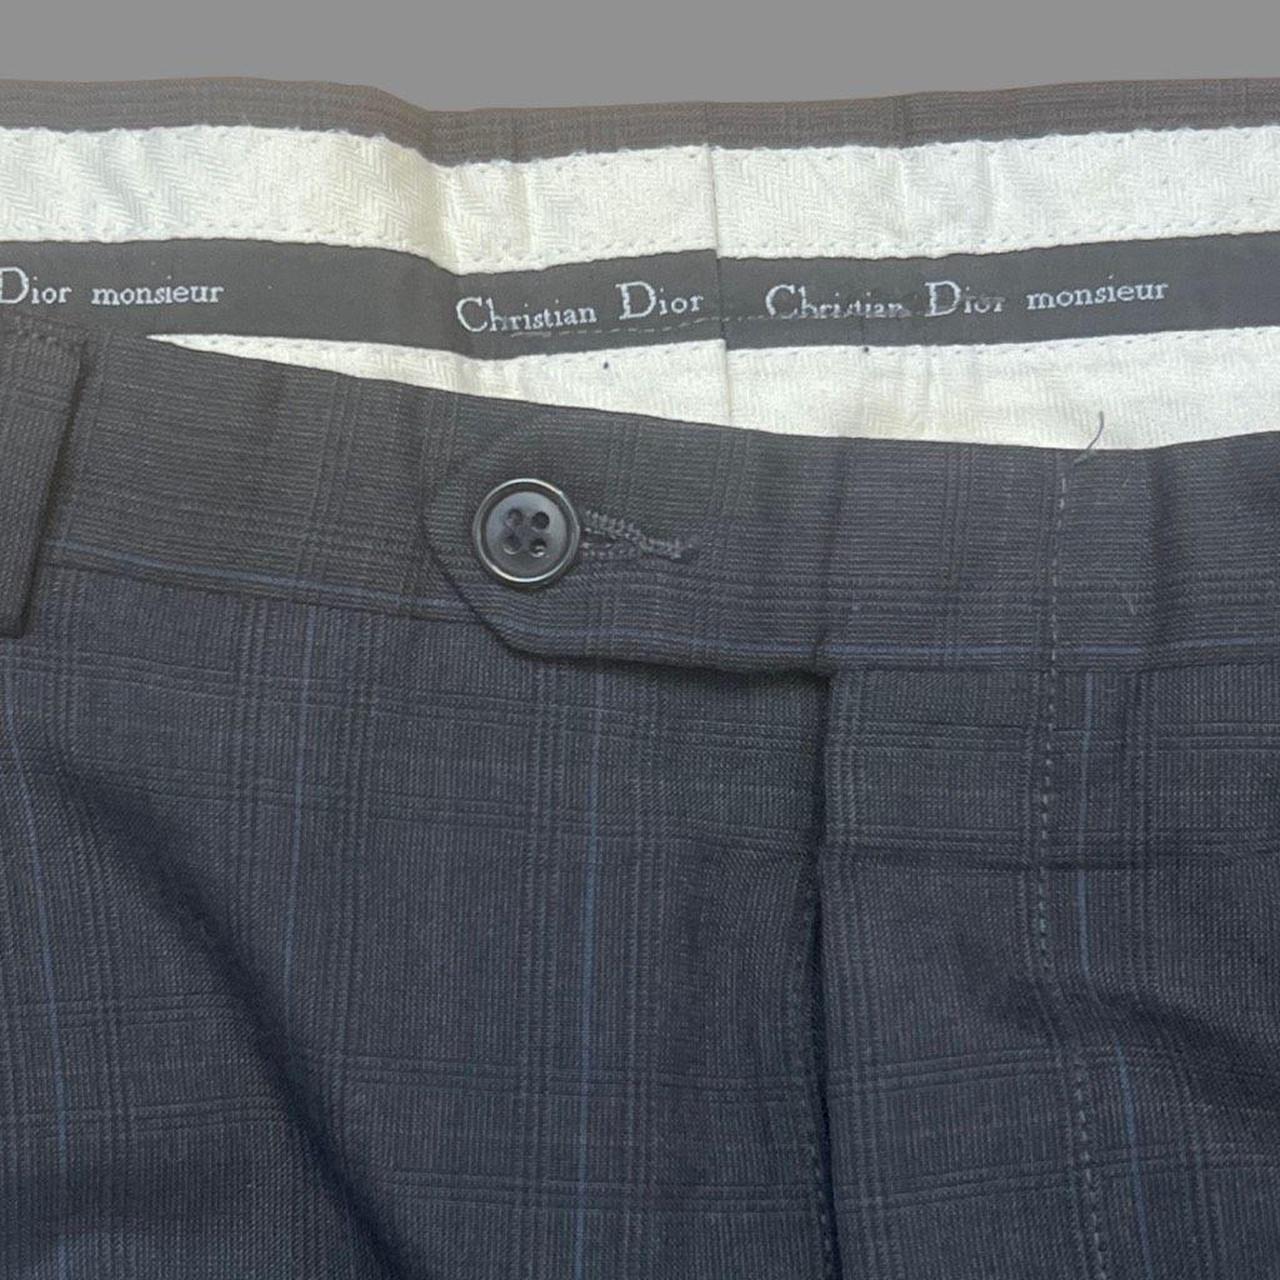 Christian Dior Monsieur Dress Pants Men 42/30